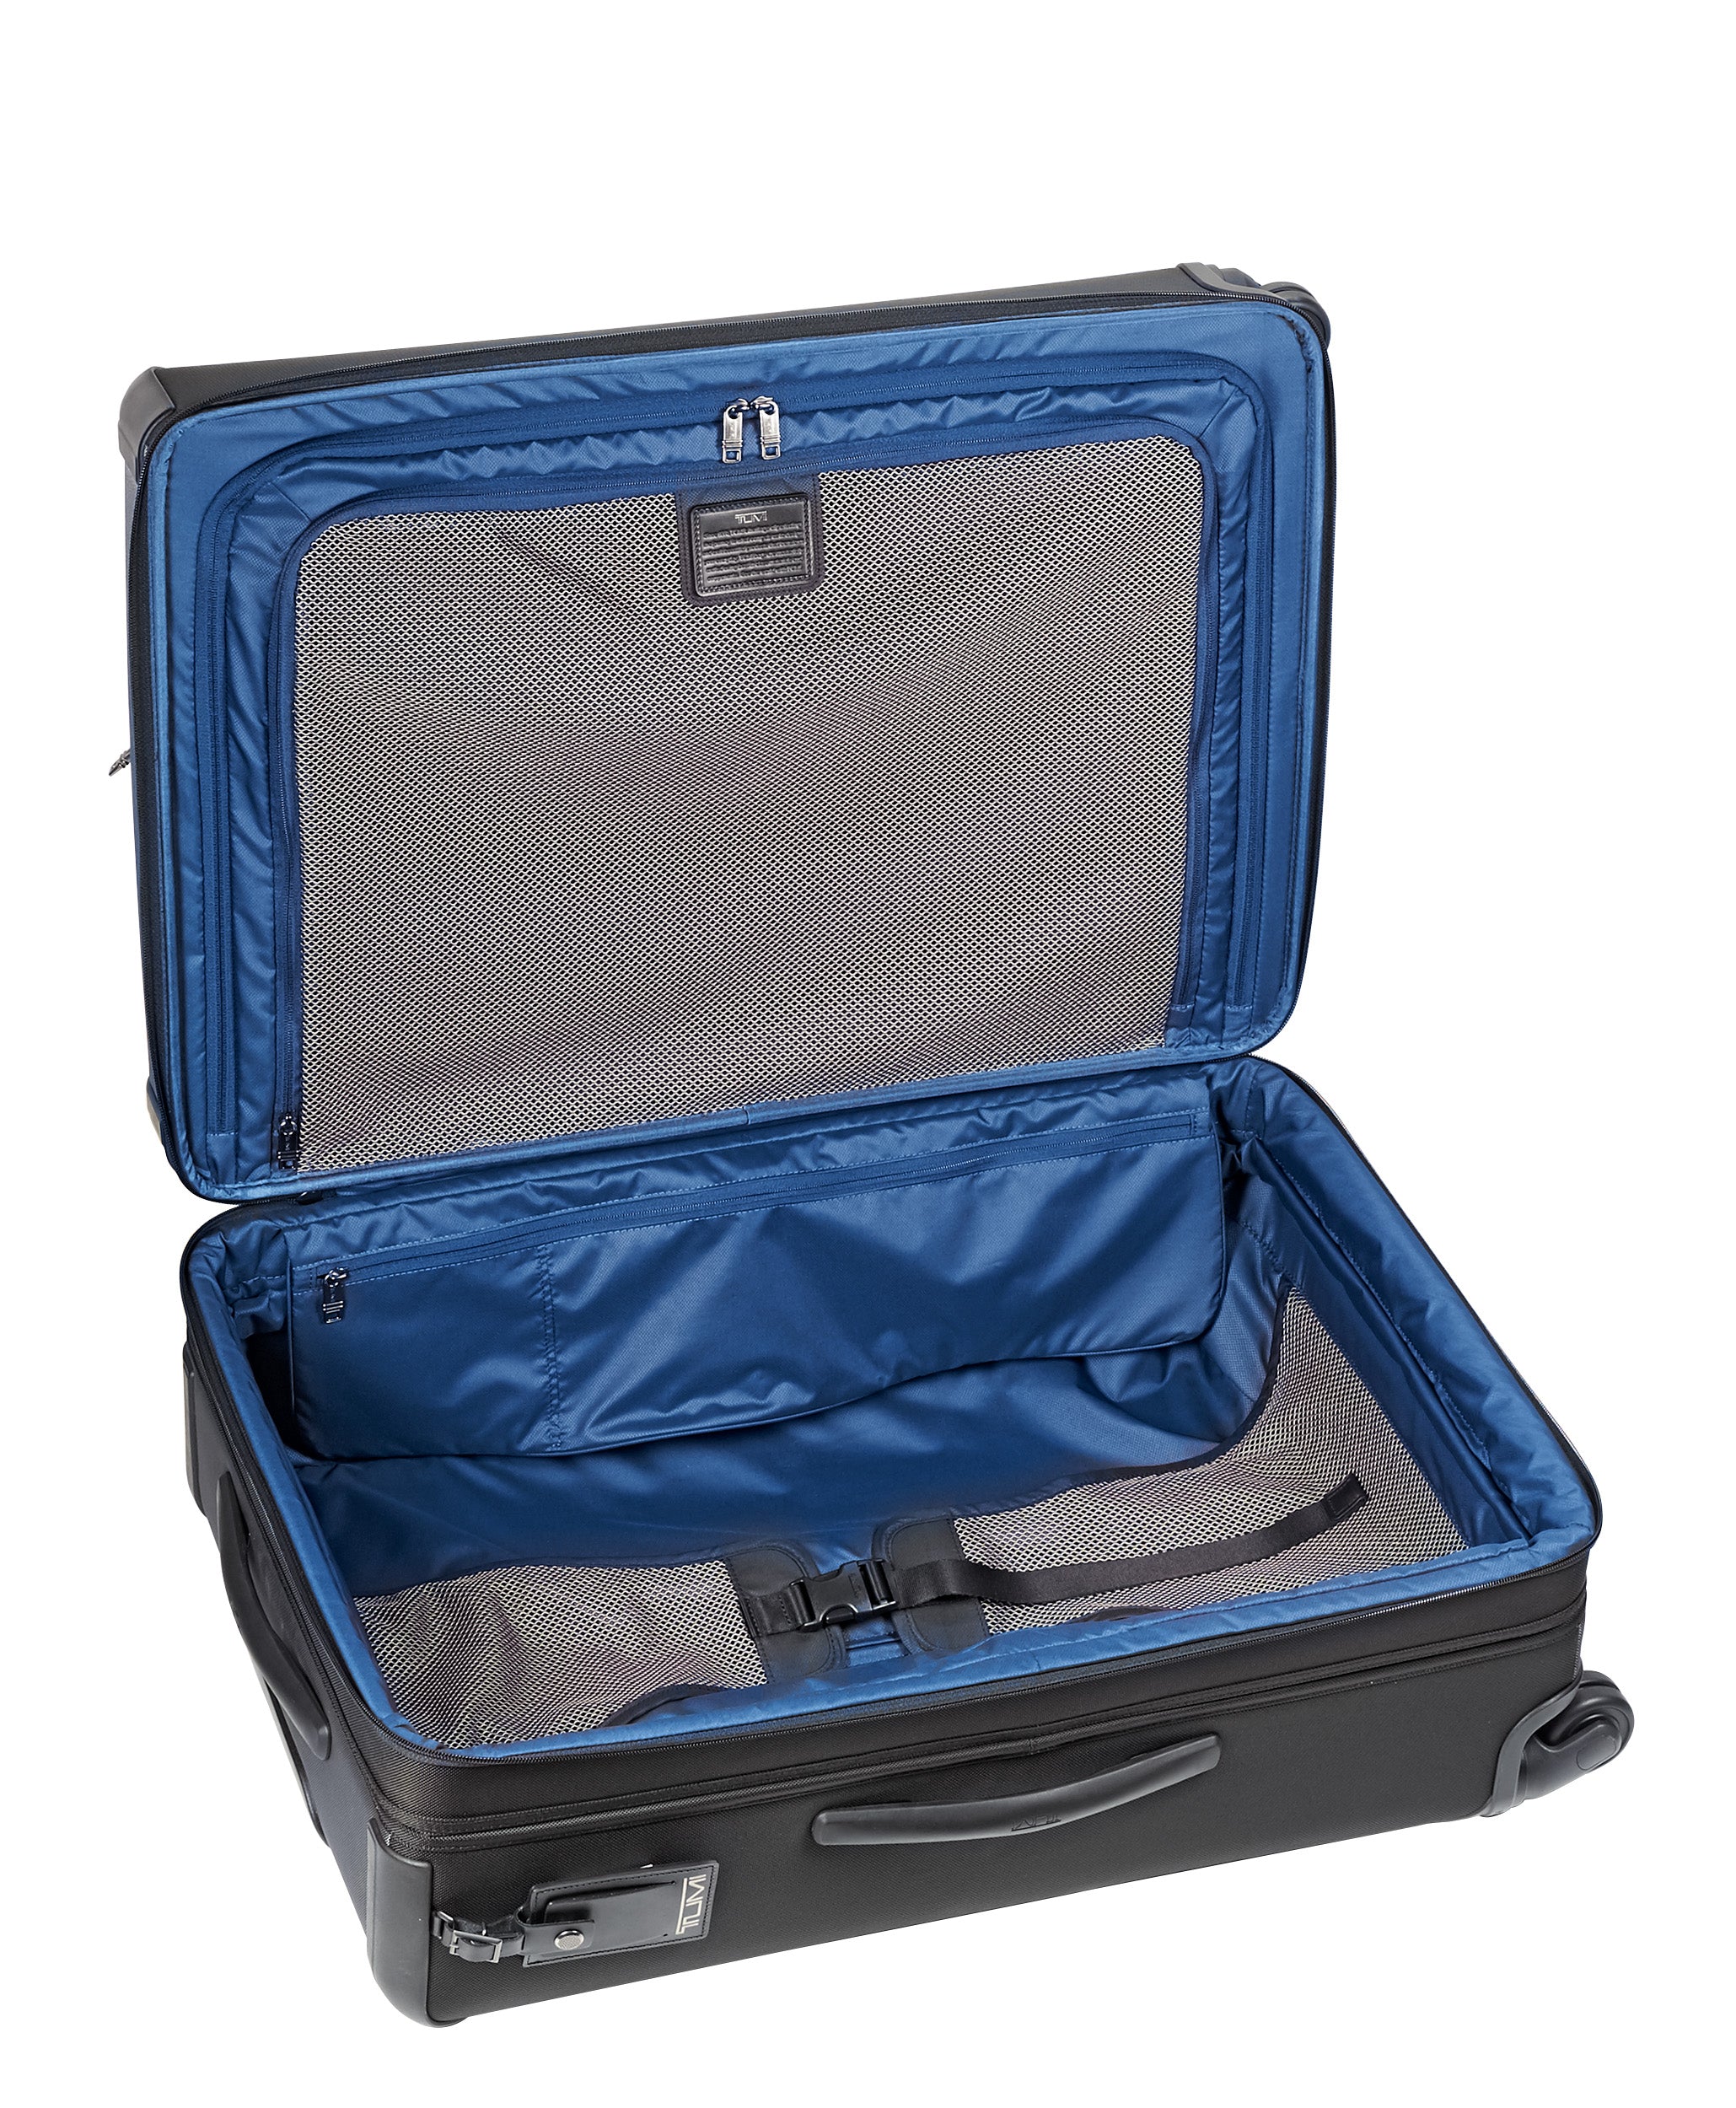 Tumi Alpha 3 Medium Trip Expandable 4 Wheel Spinner Luggage Online